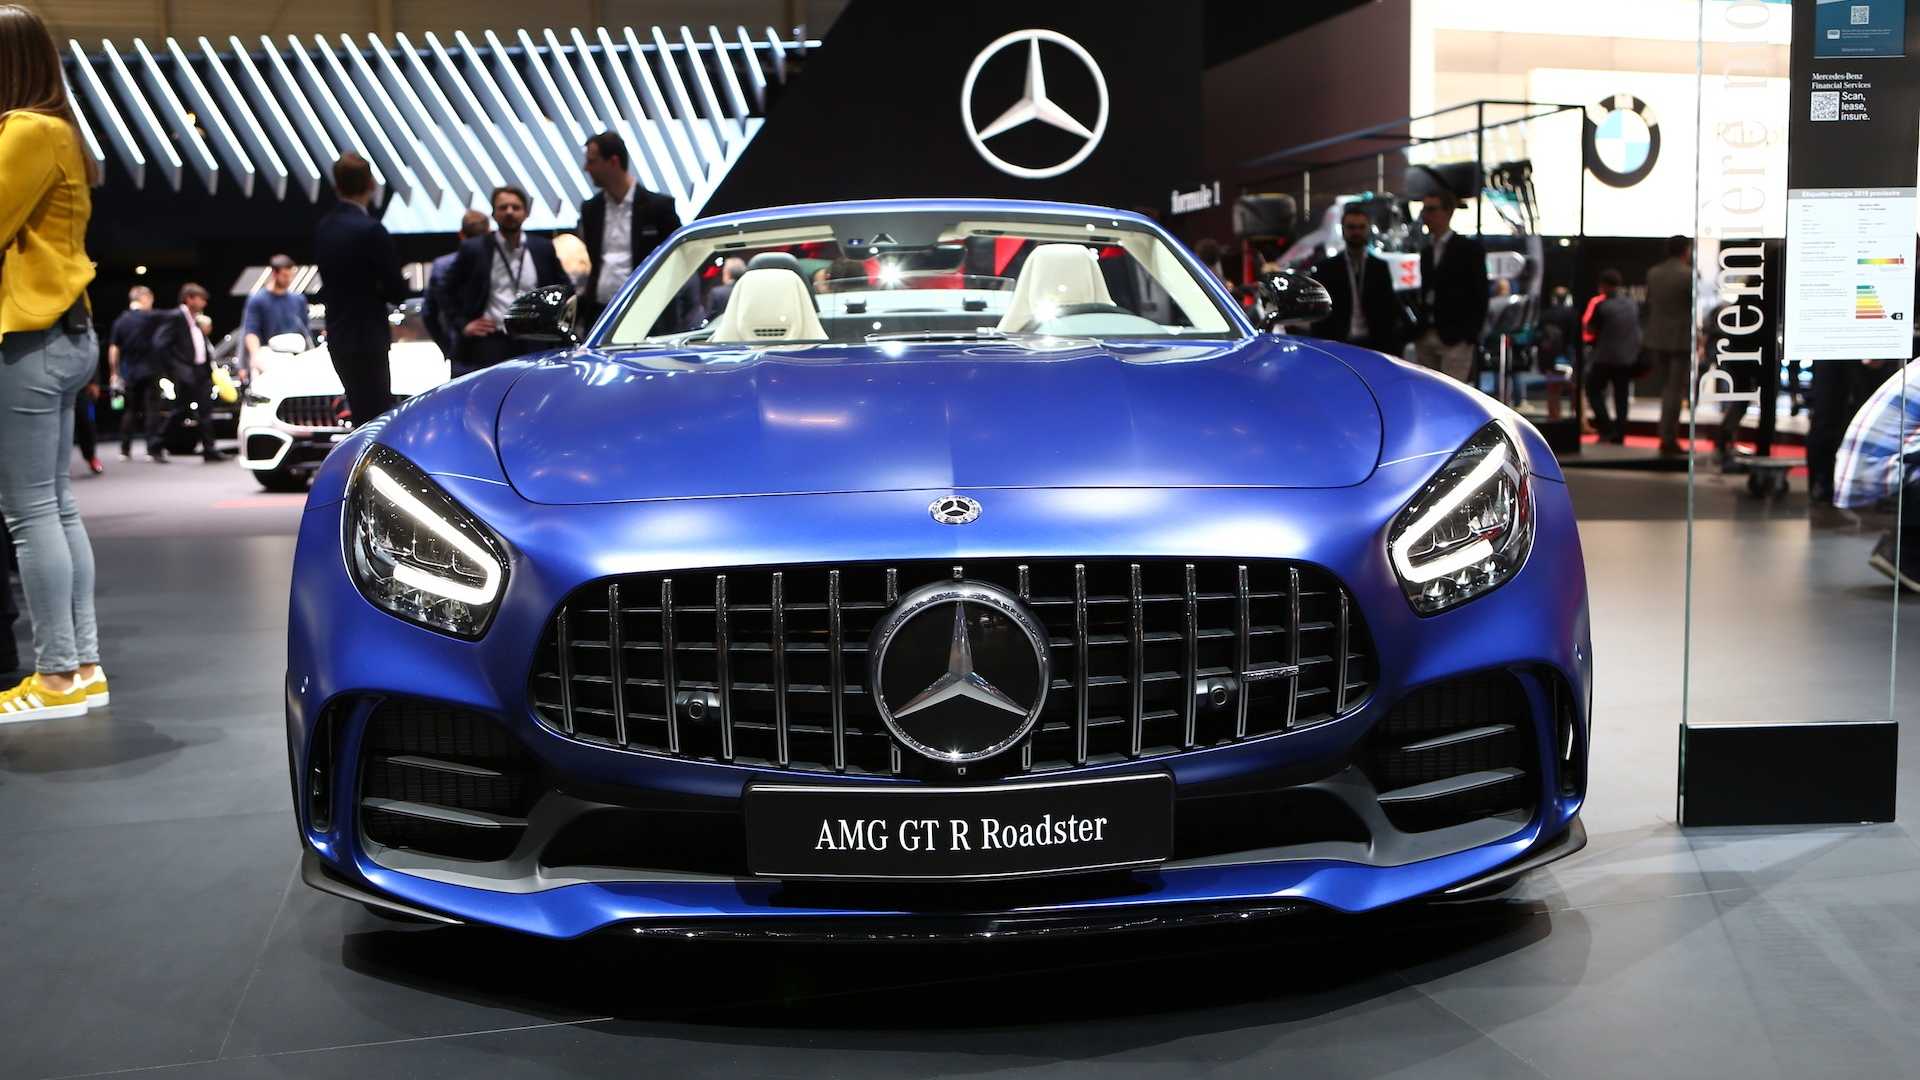 Siêu xe mui trần Mercedes-AMG GT R Roadster lộ diện